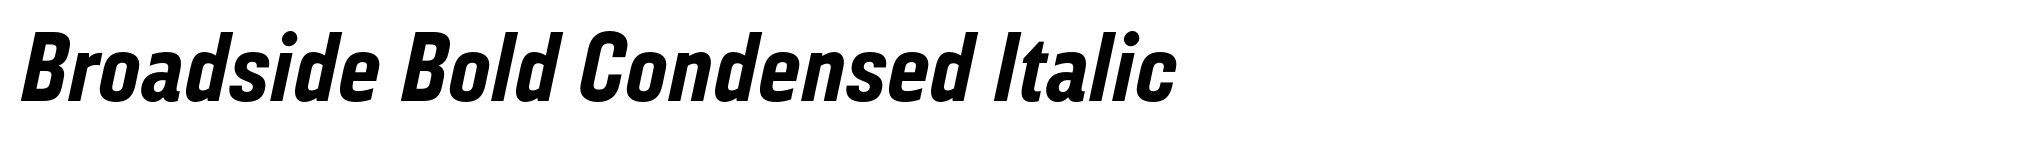 Broadside Bold Condensed Italic image